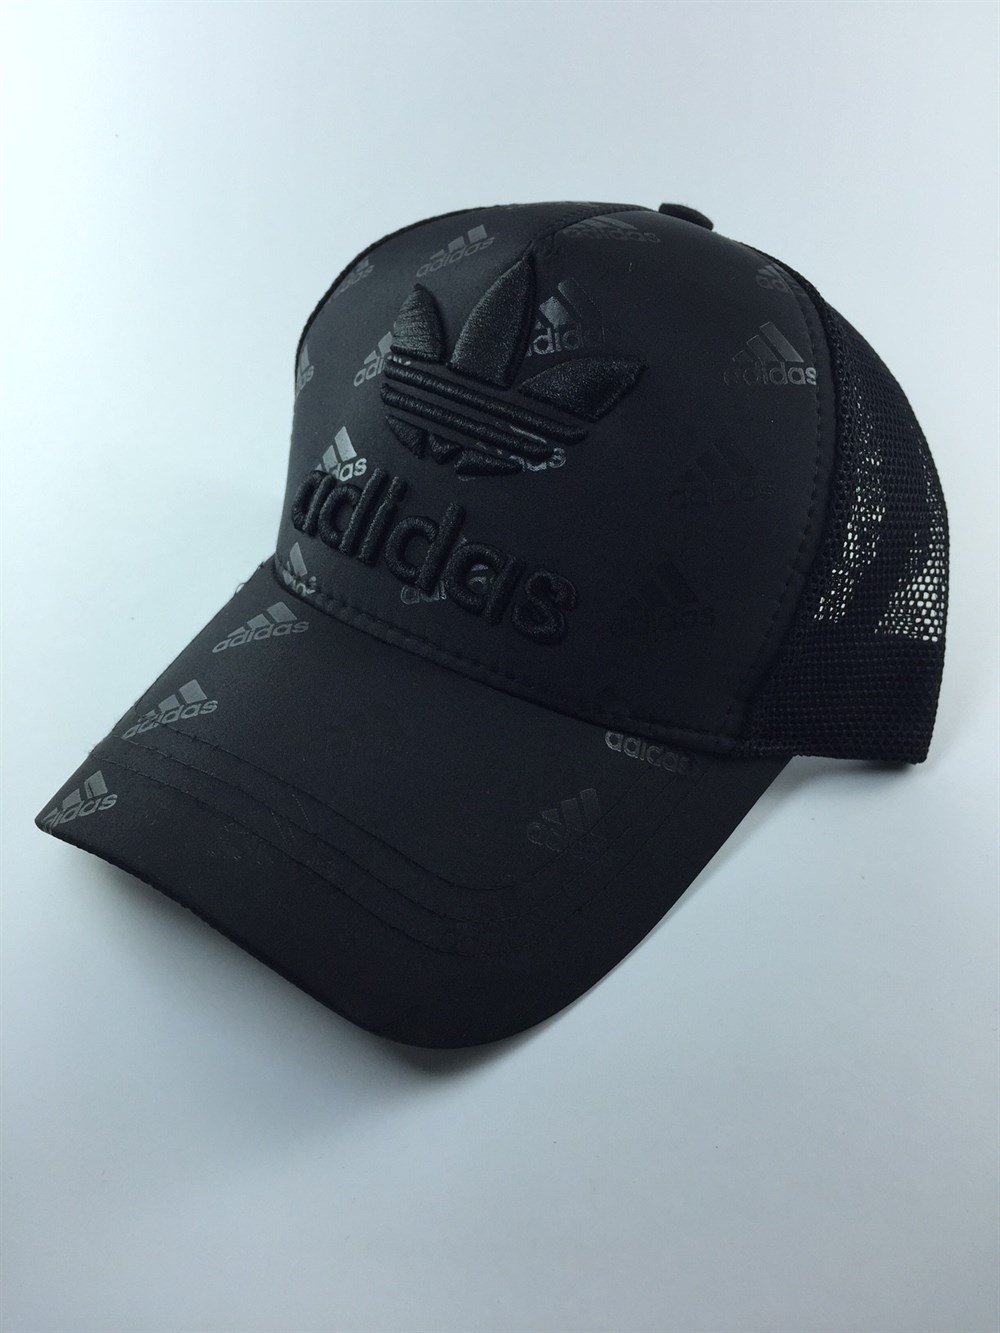 Adidas Şapka